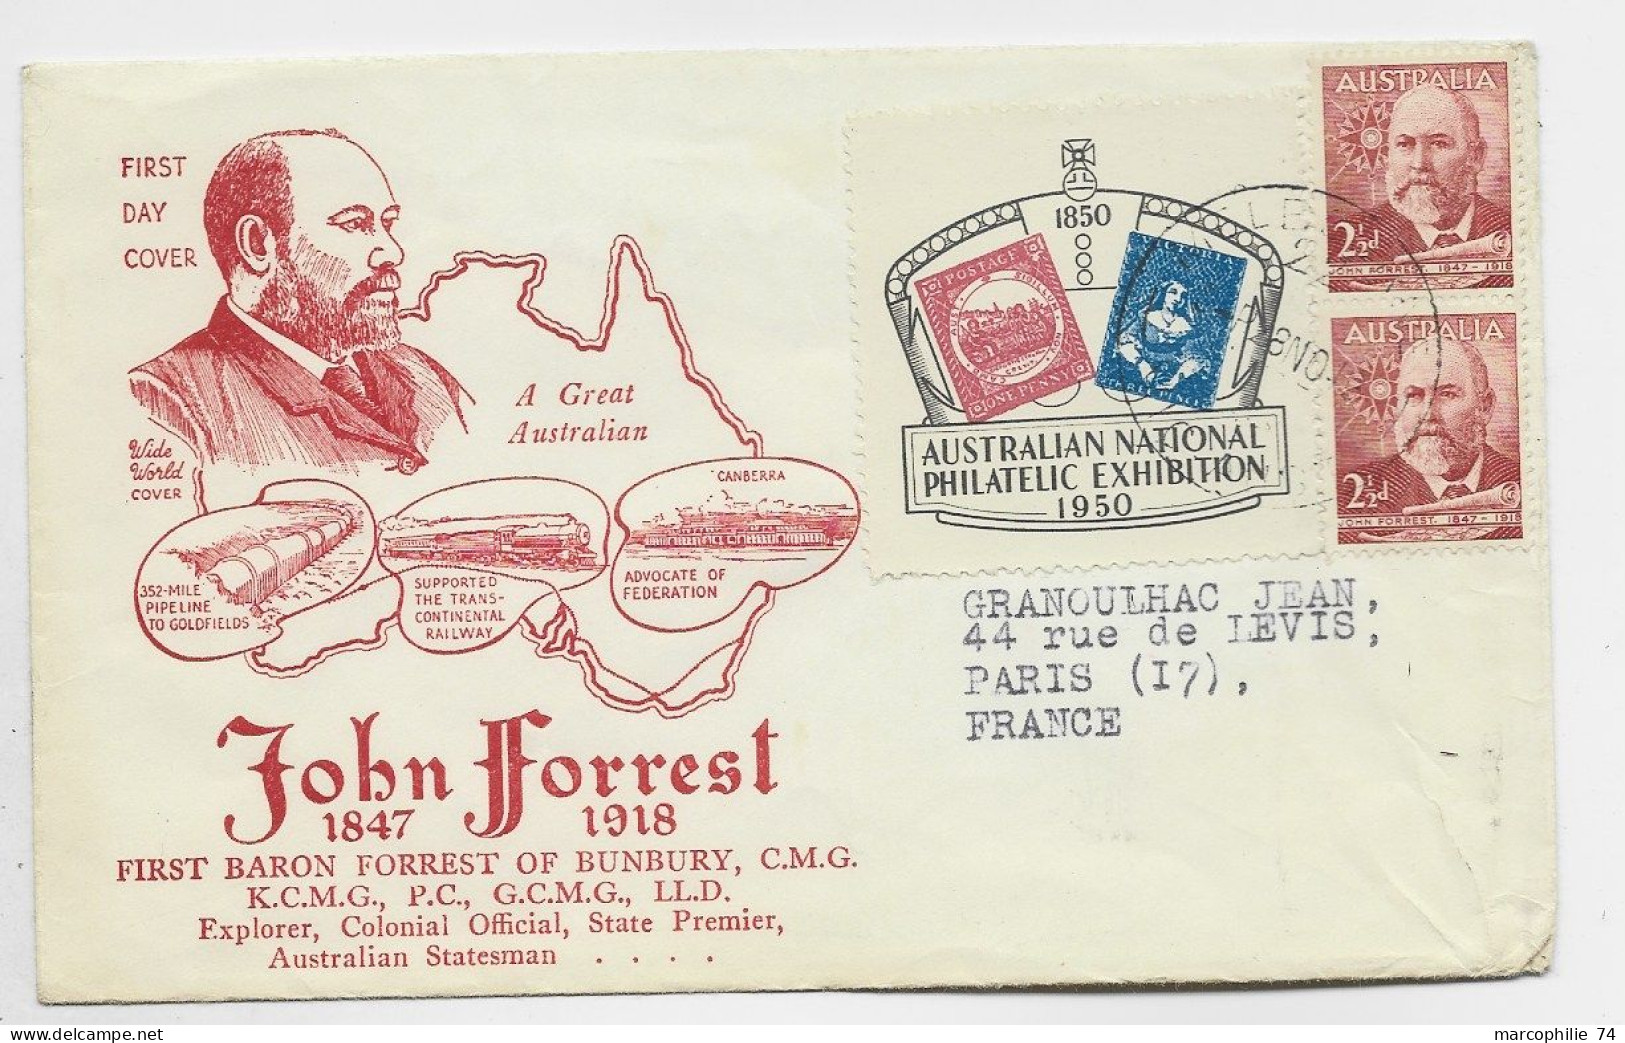 AUSTRALIA 2 1/2D PAIRE LETTRE COVER JOHN FORREST FIRST BARRON 1847 1918 FDC  MELBOURNE 1950 TO FRANCE - Cartas & Documentos